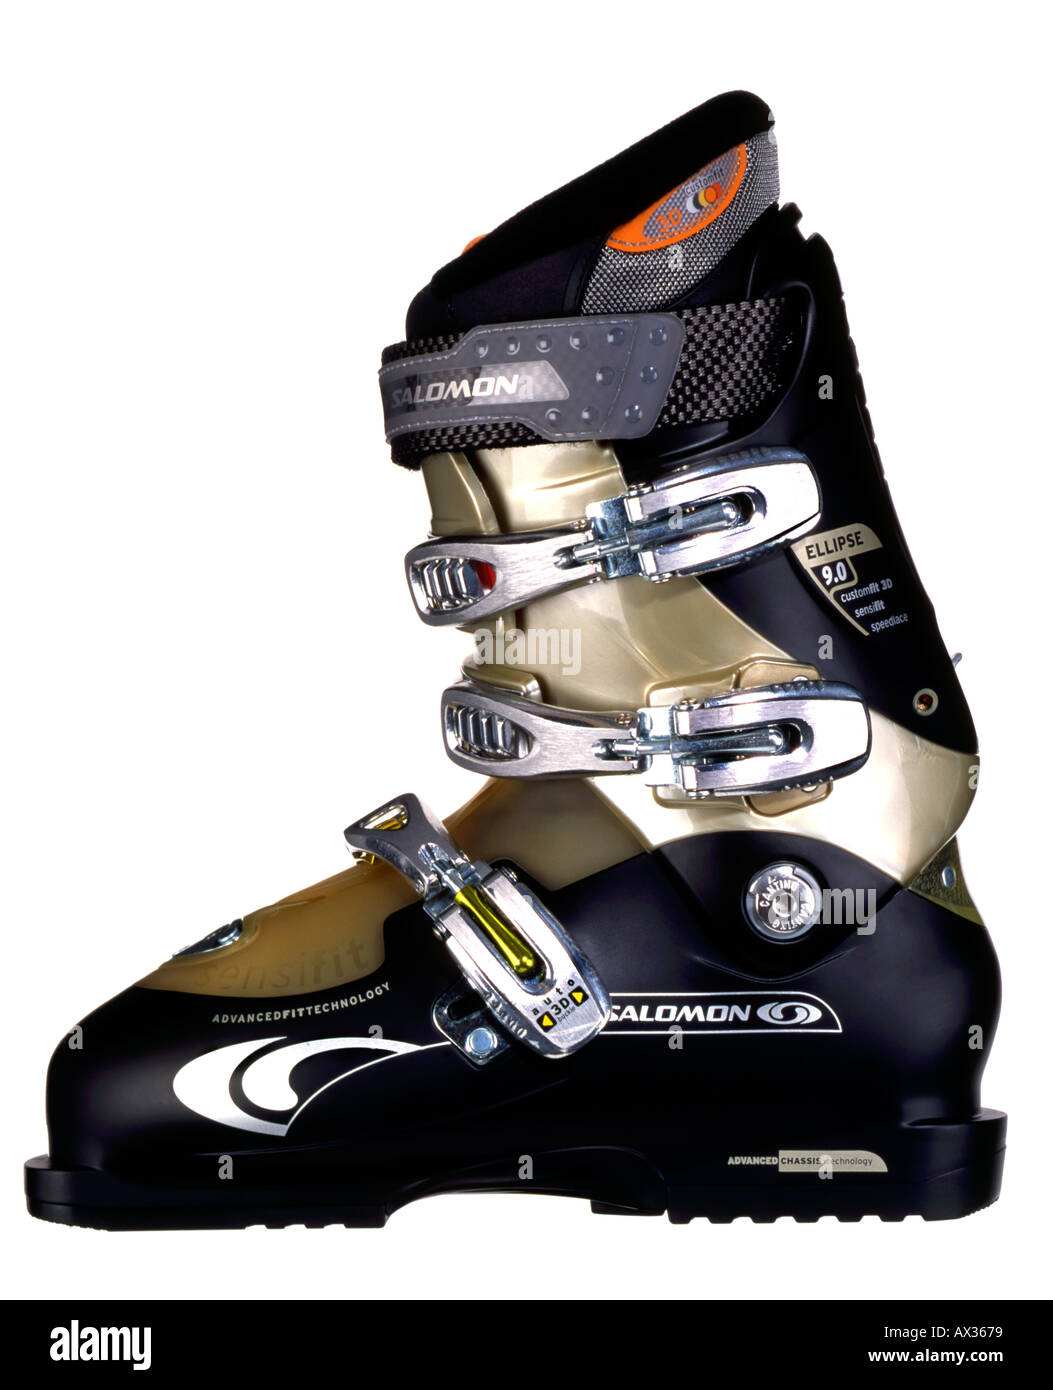 Chaussures de ski Salomon Photo Stock - Alamy